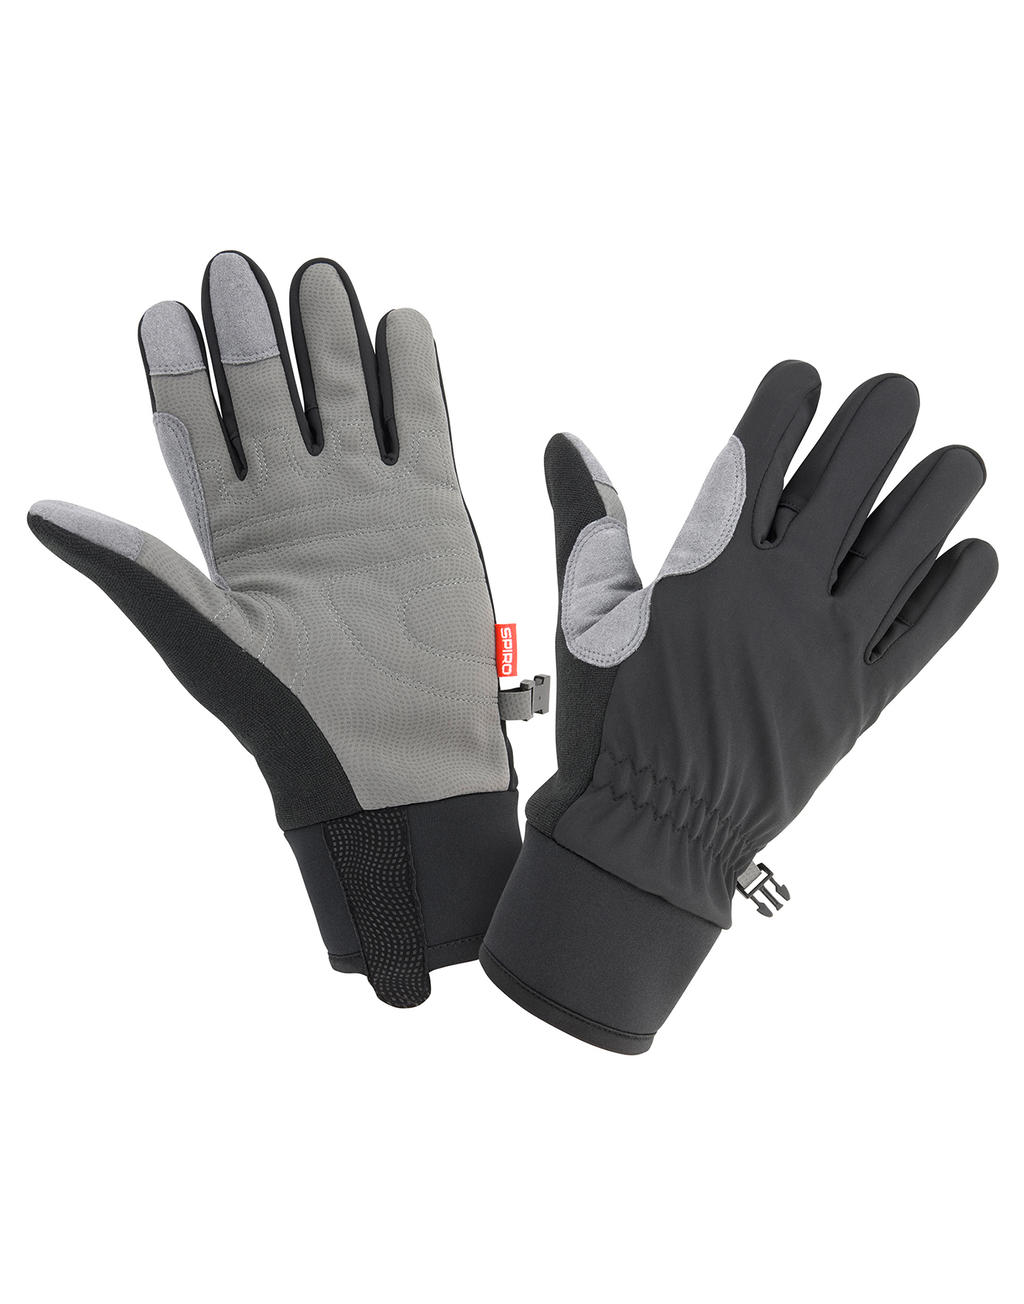 Spiro rukavice Winter - black/grey